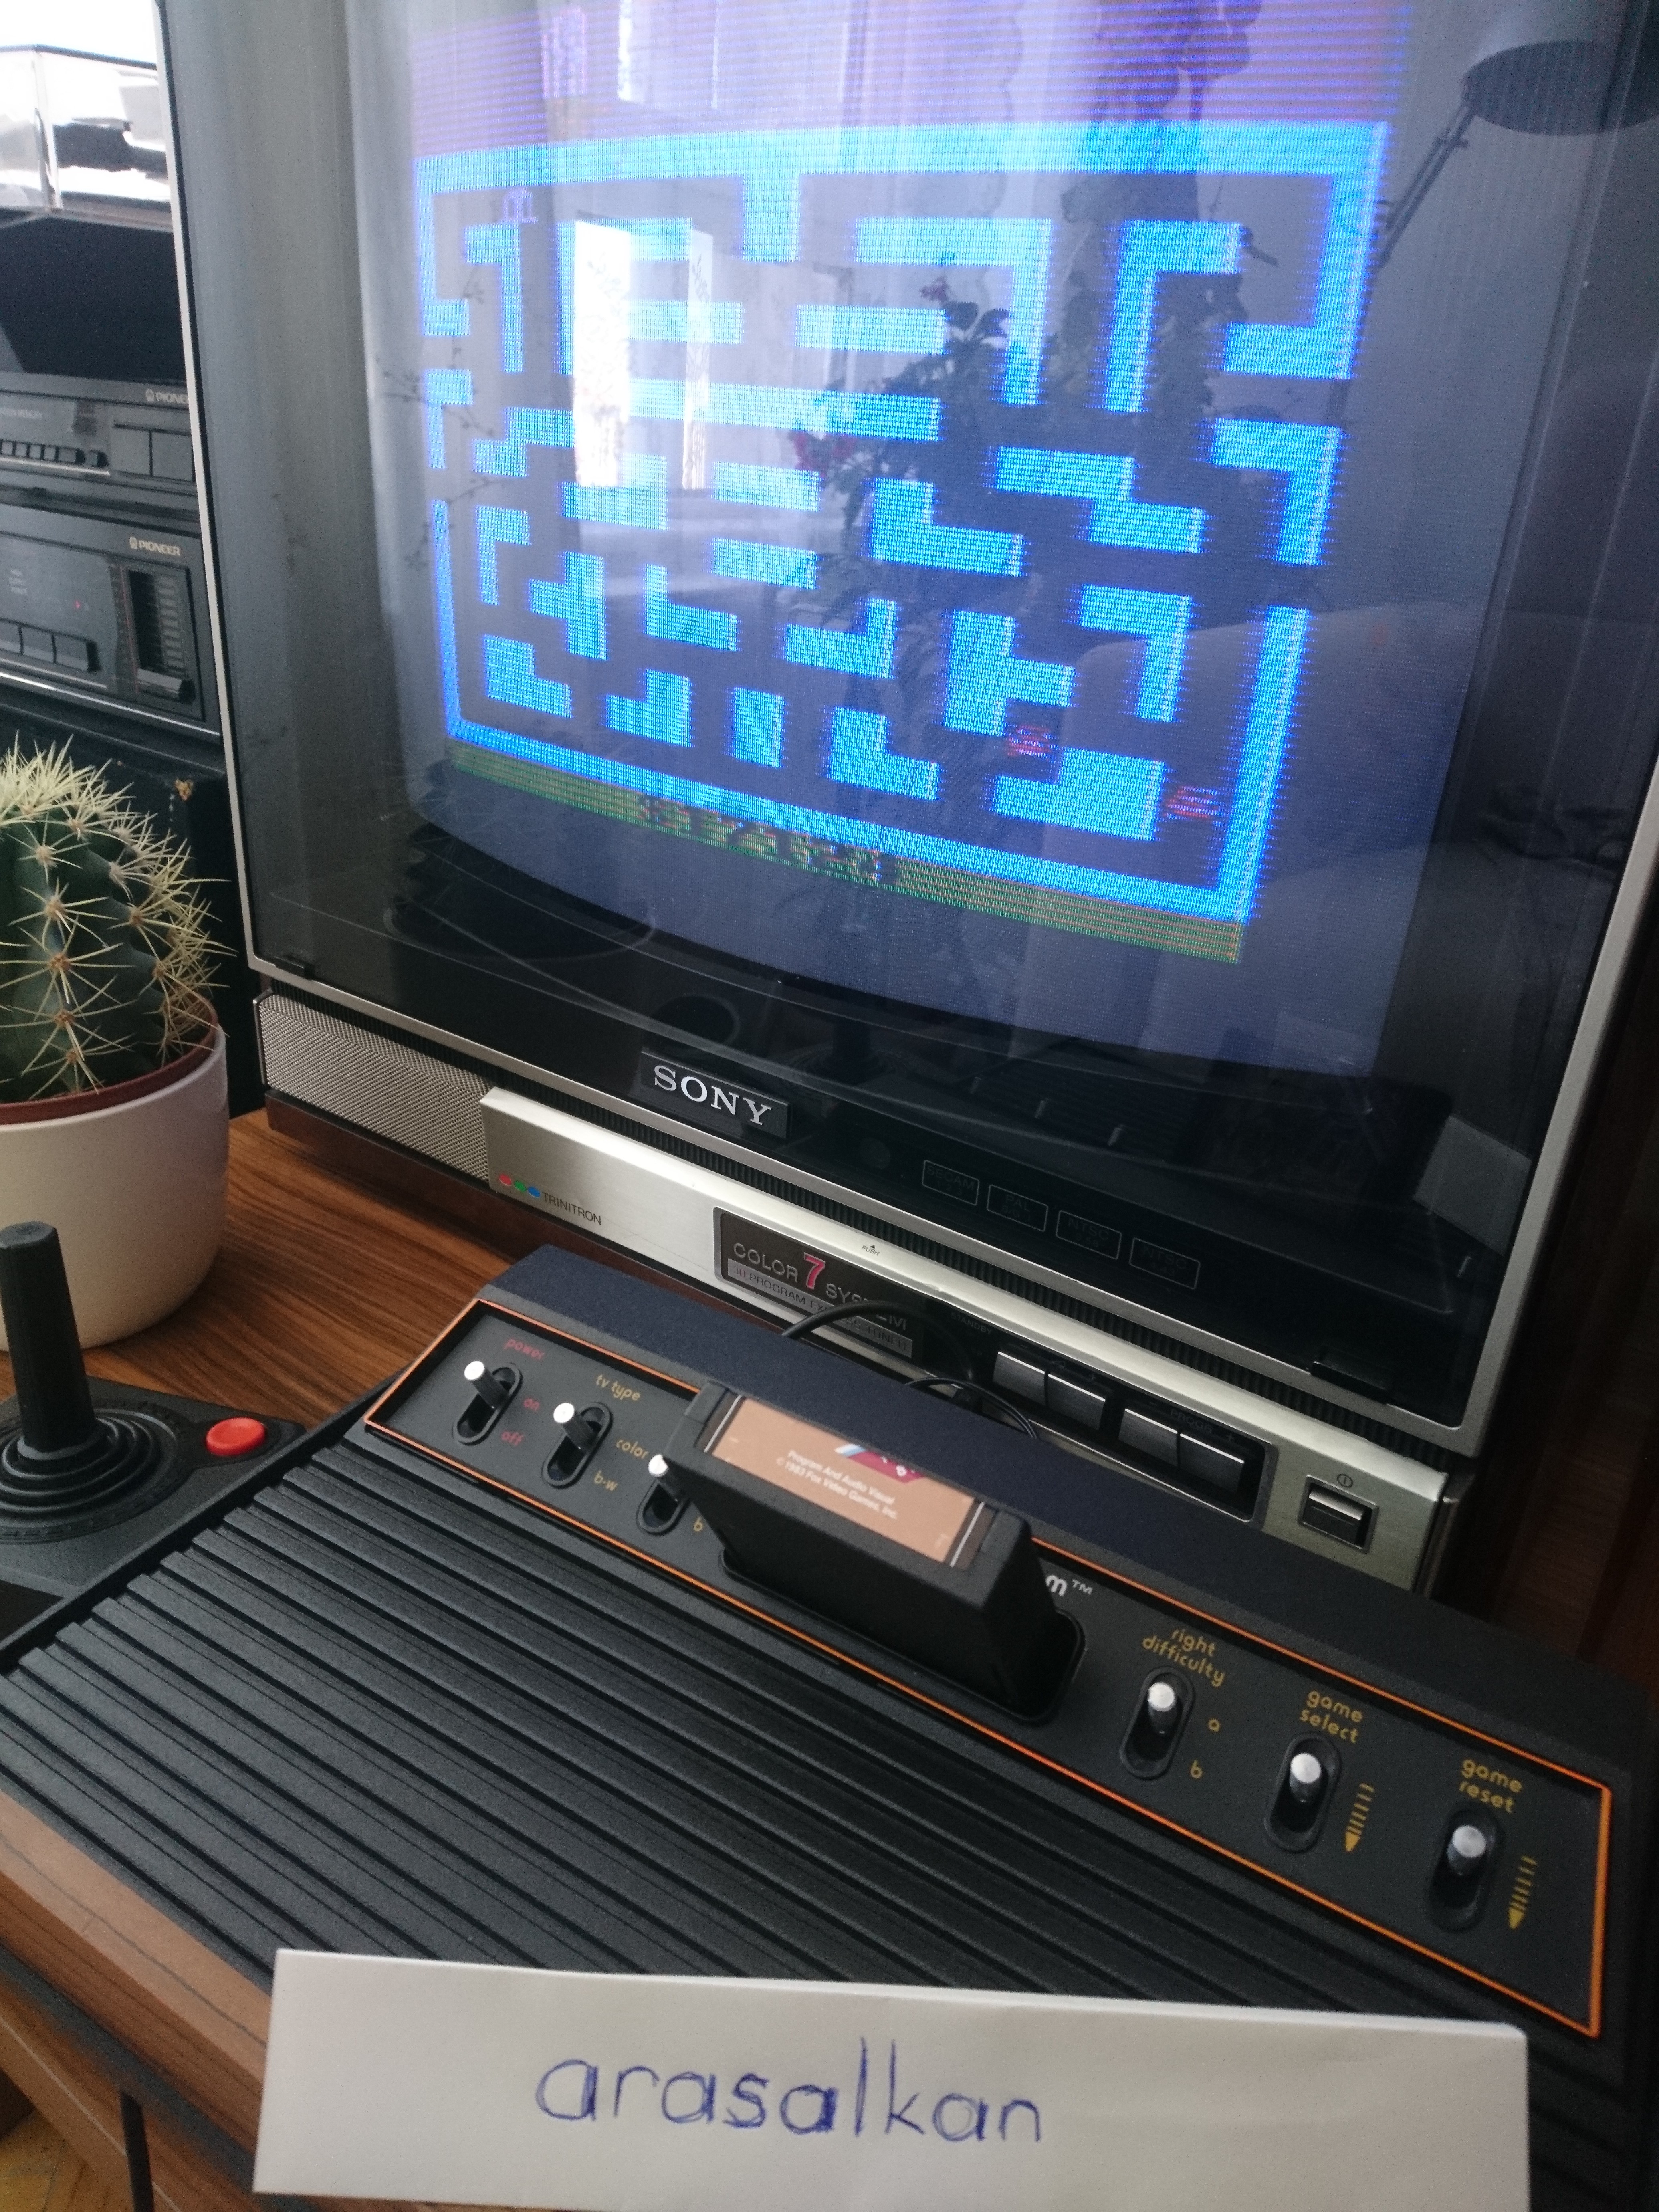 arasalkan: Bank Heist (Atari 2600 Expert/A) 17,124 points on 2017-09-02 02:44:02